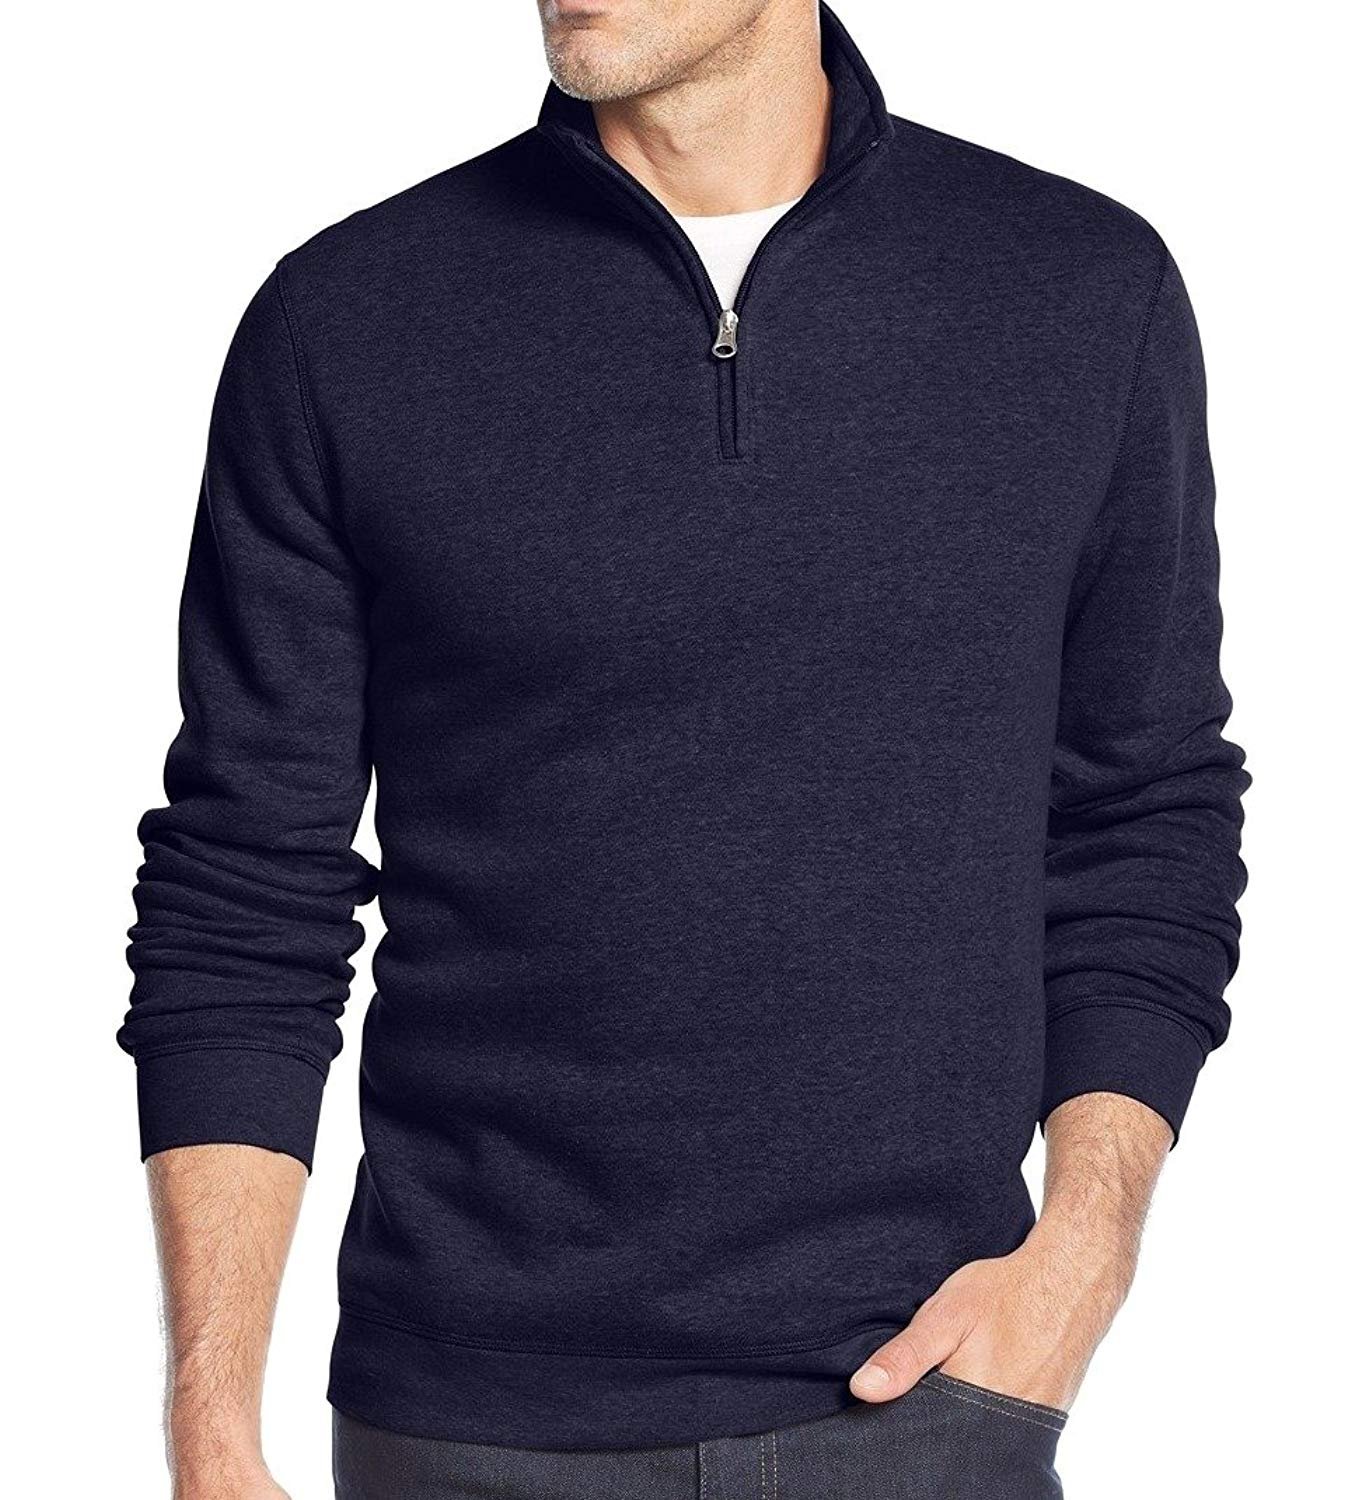 John Ashford Mens Quarter-Zip Sweatshirt, Navy, Small 636206352102 | eBay